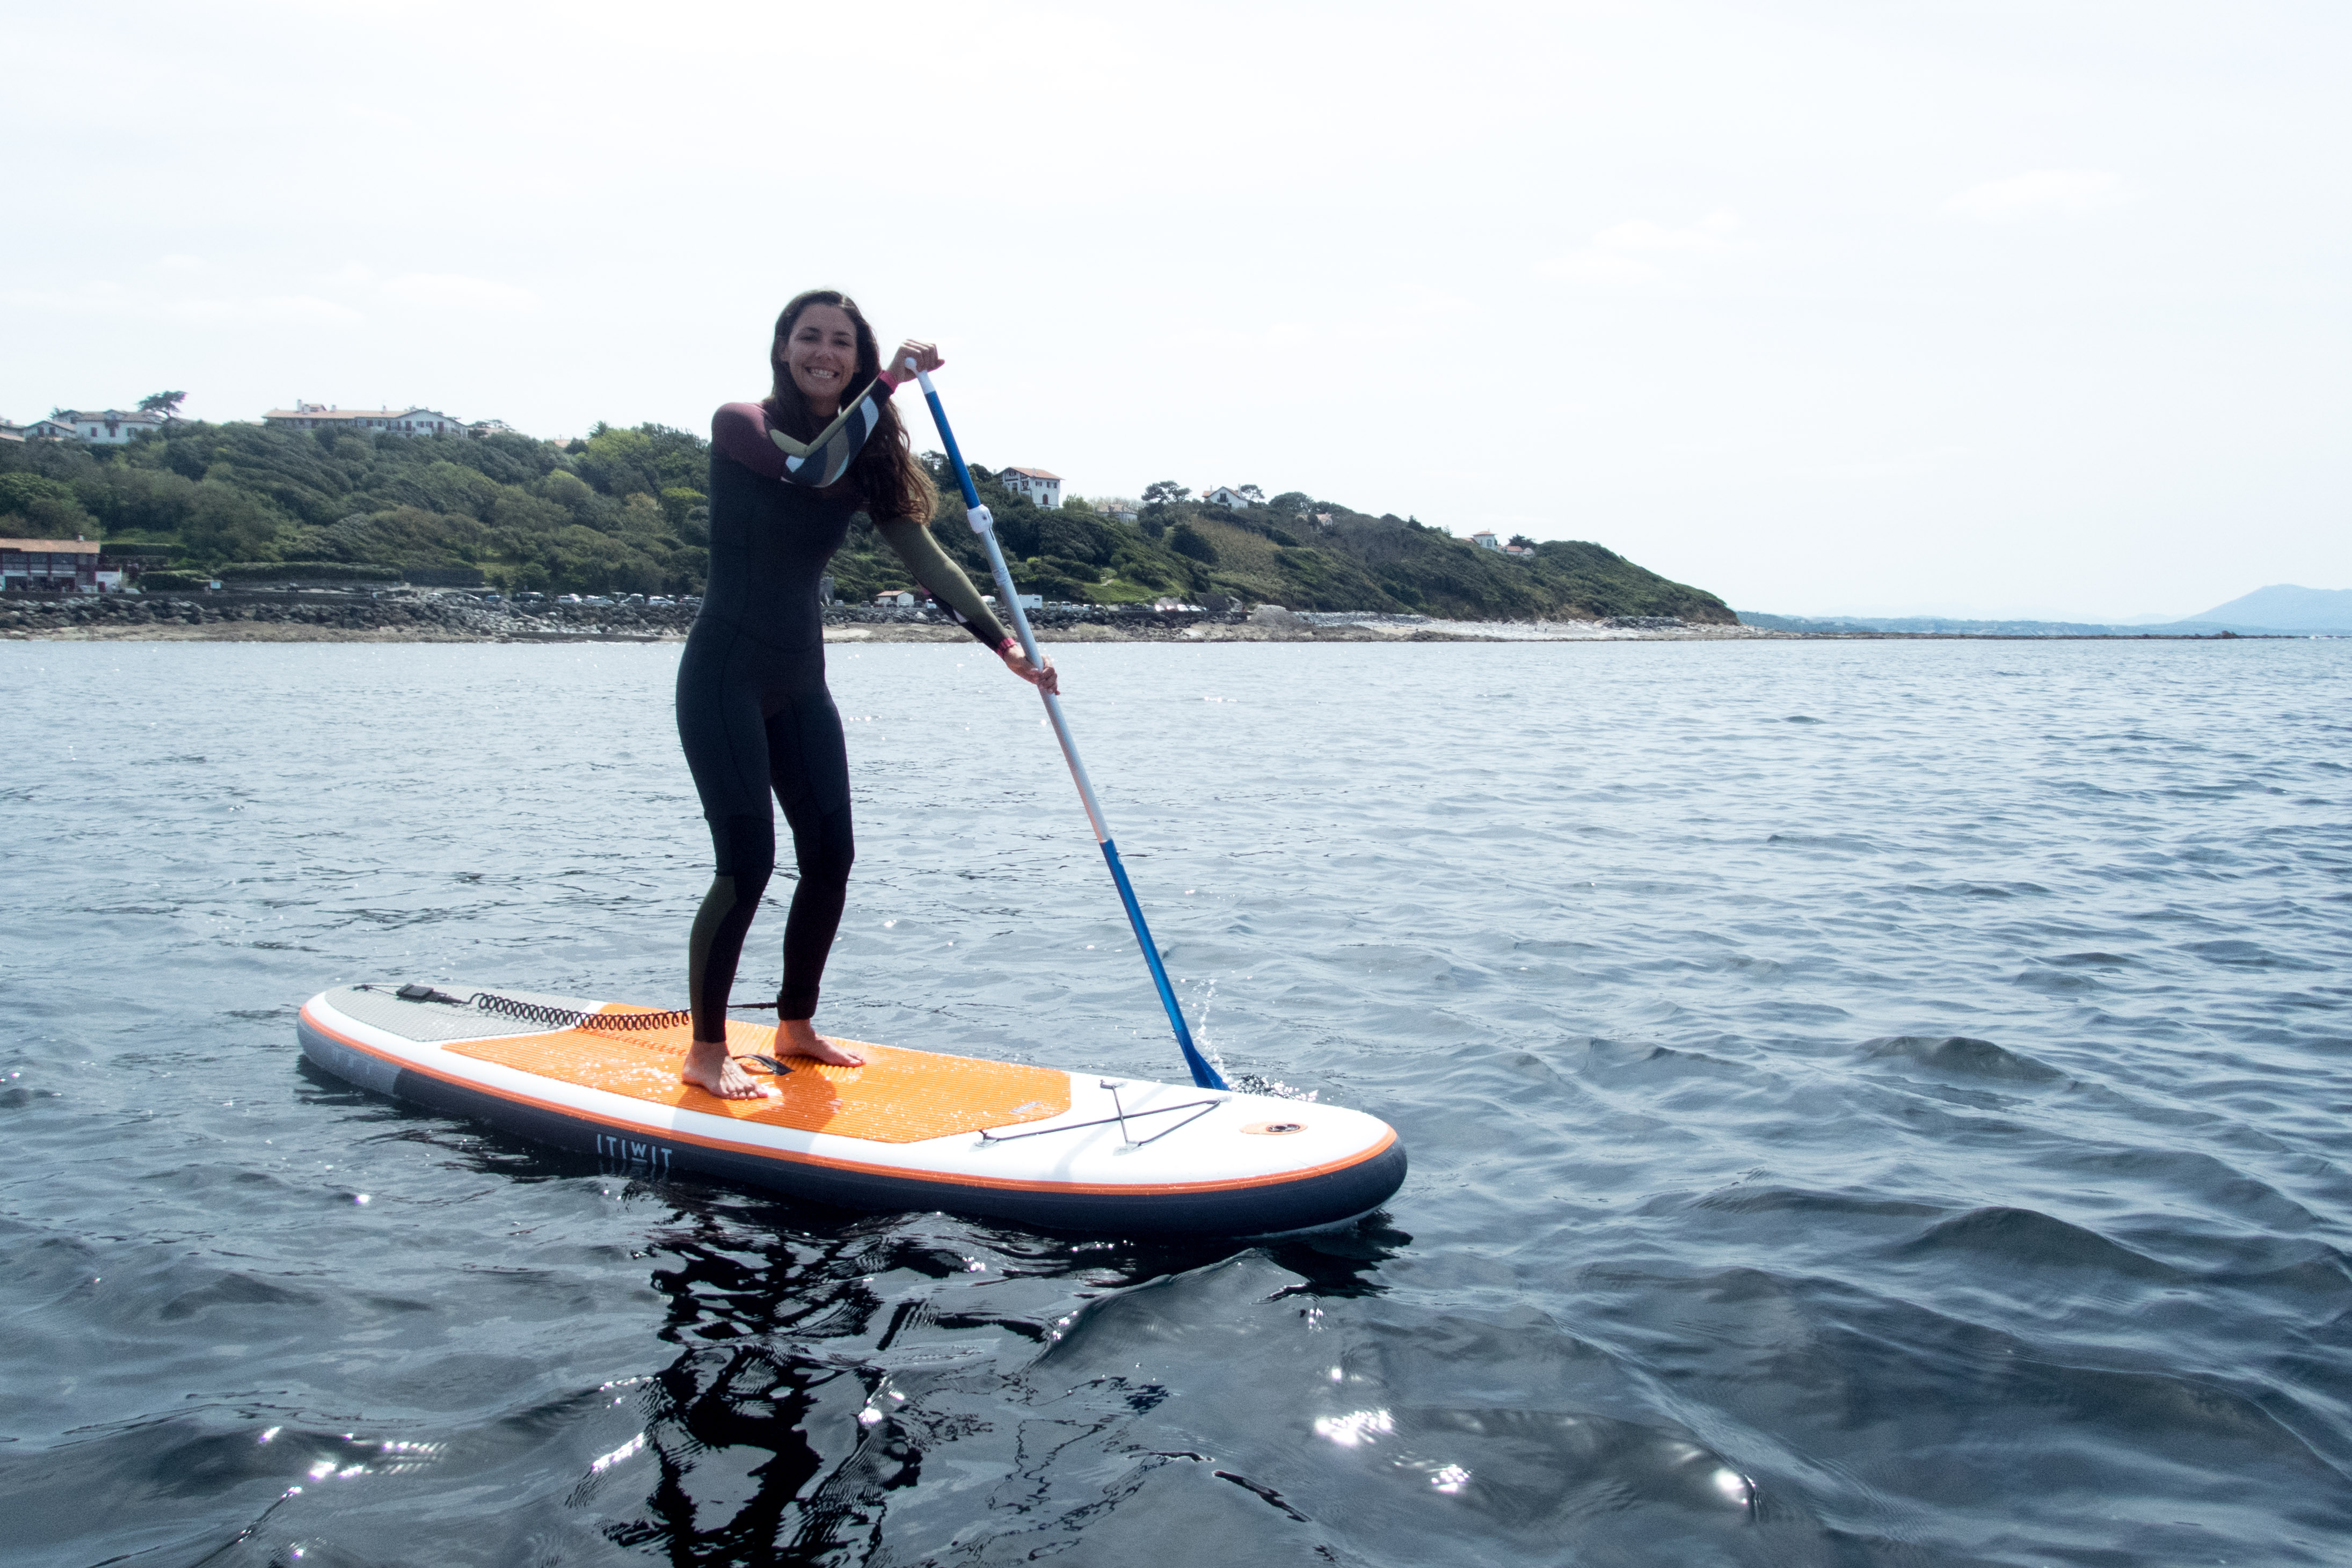 le stand up paddle gonflable  test u00e9 et approuv u00e9    u2013 surf madame